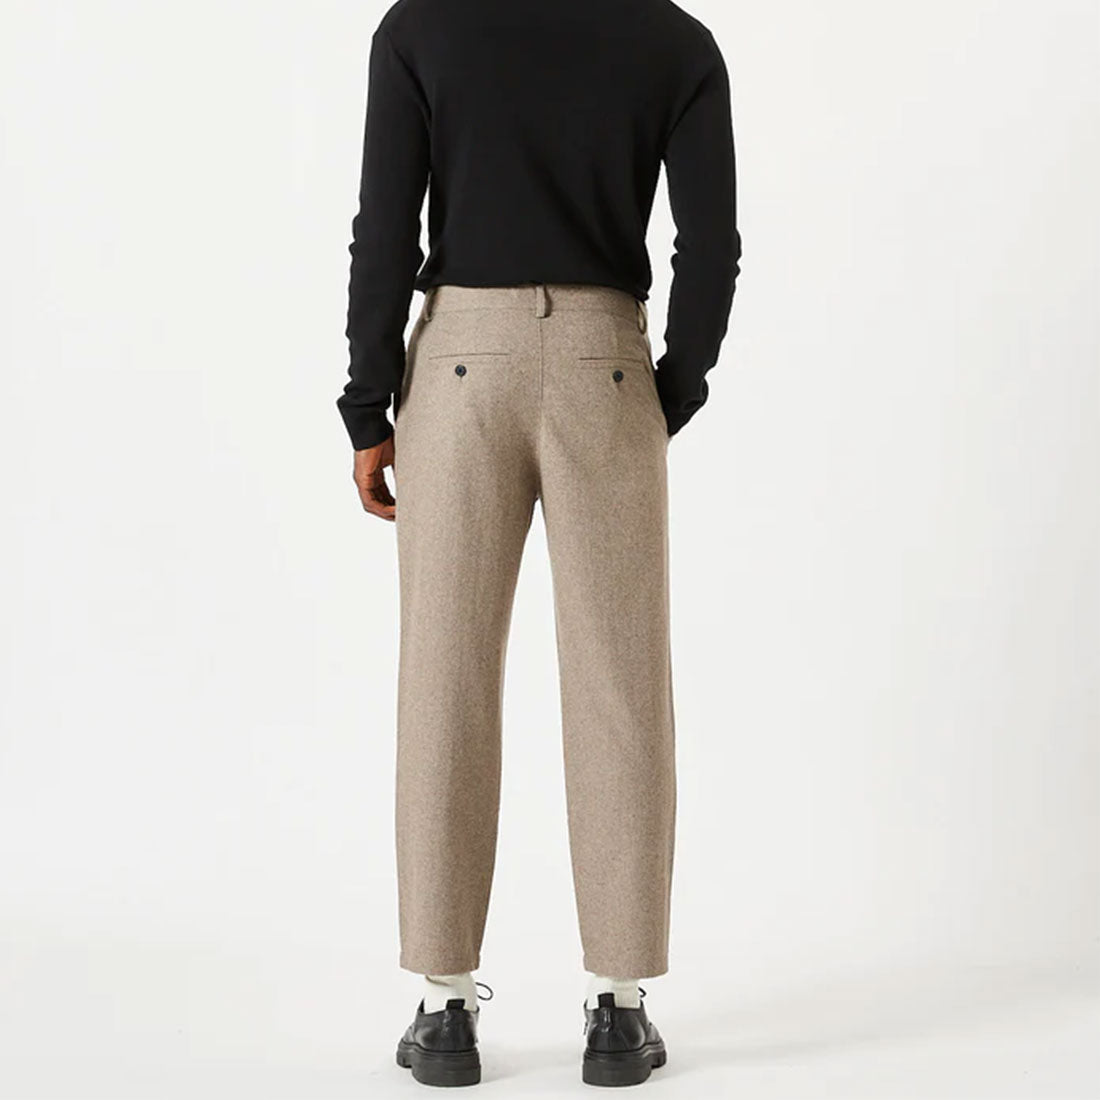 Pantalone in lana Minimum - Bertilo 3201-Beige